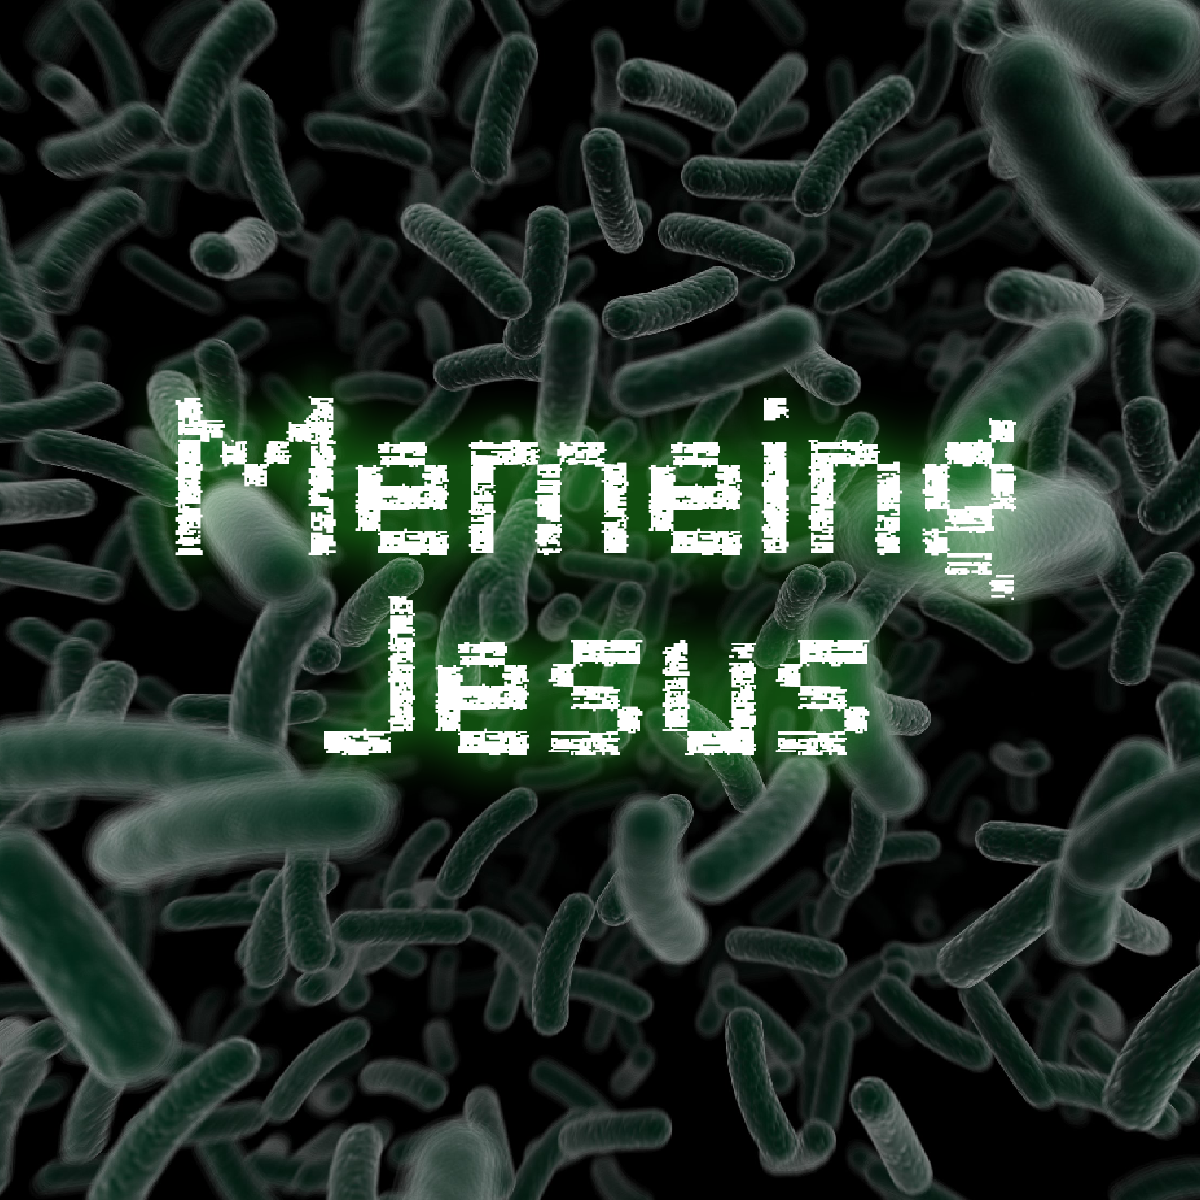 Memeing Jesus | Episode 1: Intros